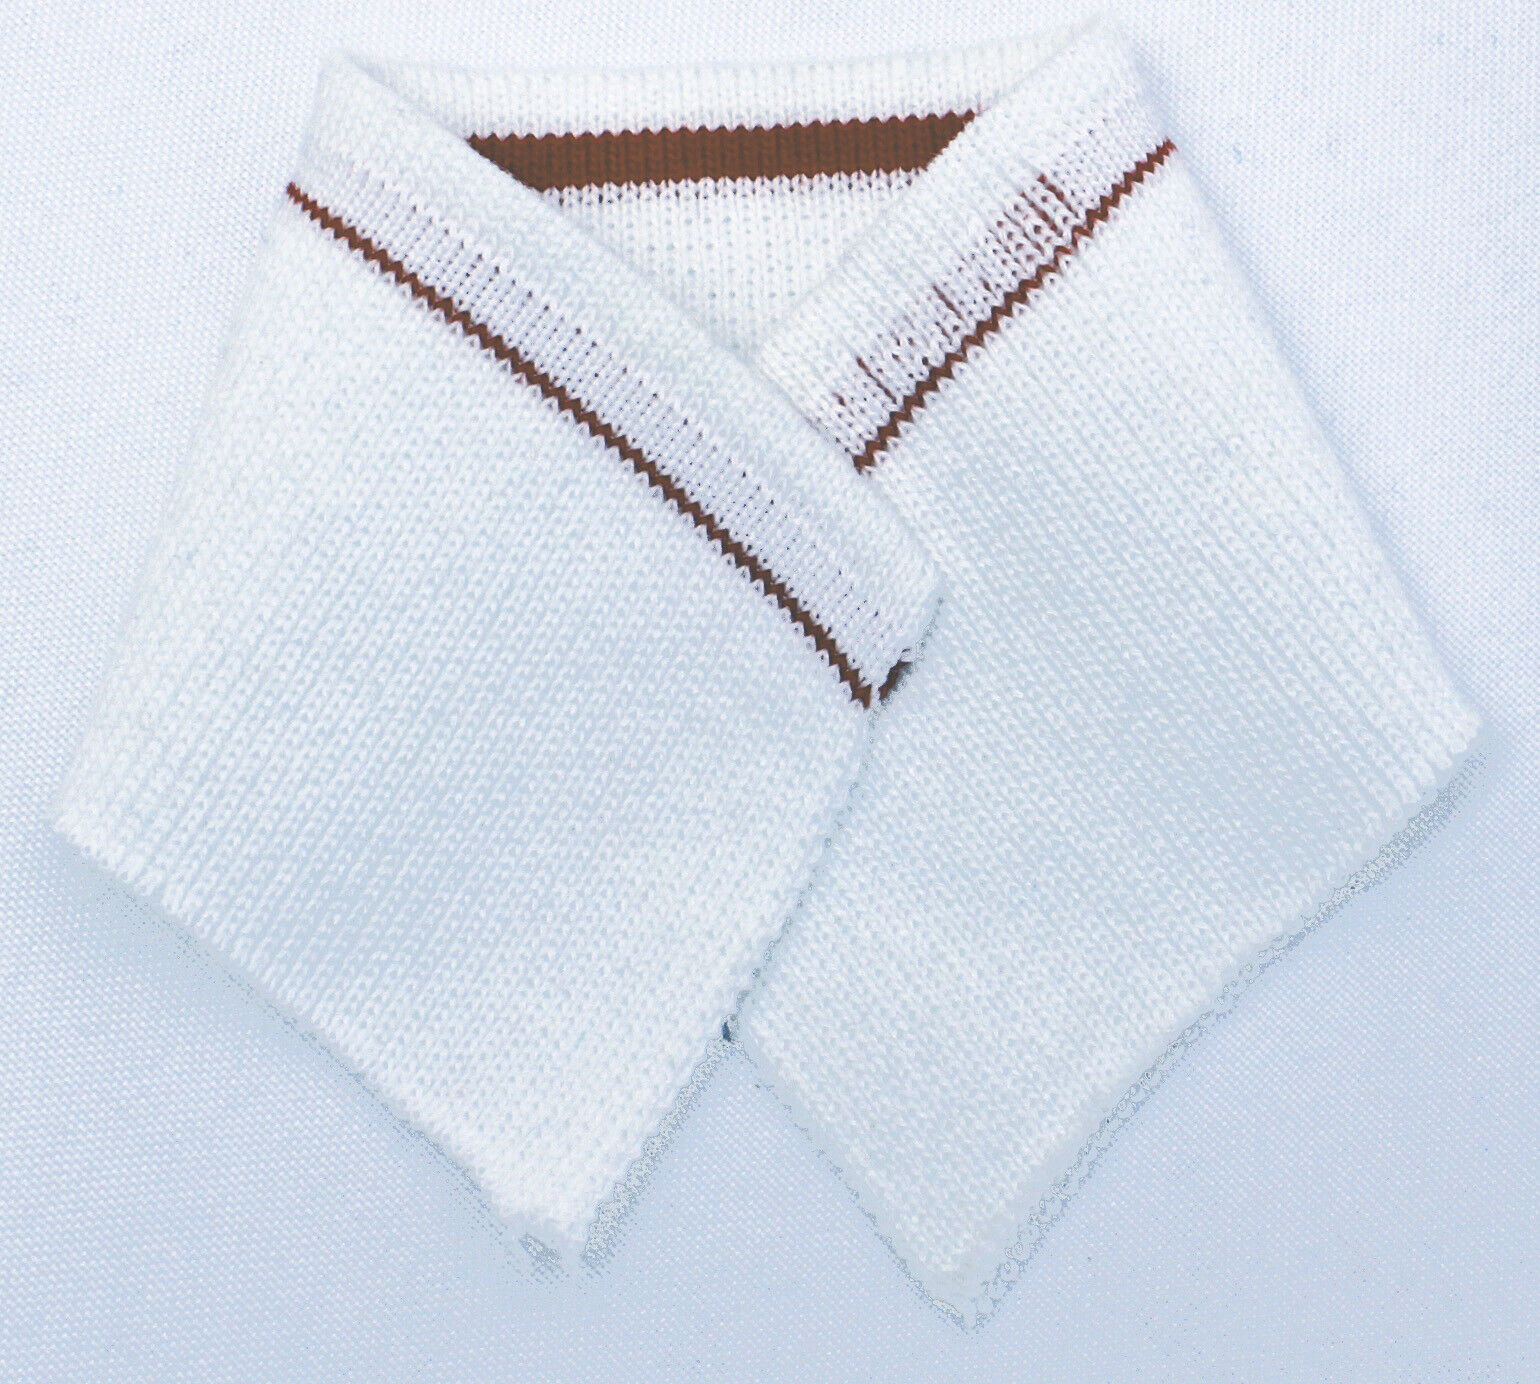 Rugby Knit Shirt Cuff White Jacquard Knit Red Stripe 2.5" x 9.5" Trim M516.12 - $3.97